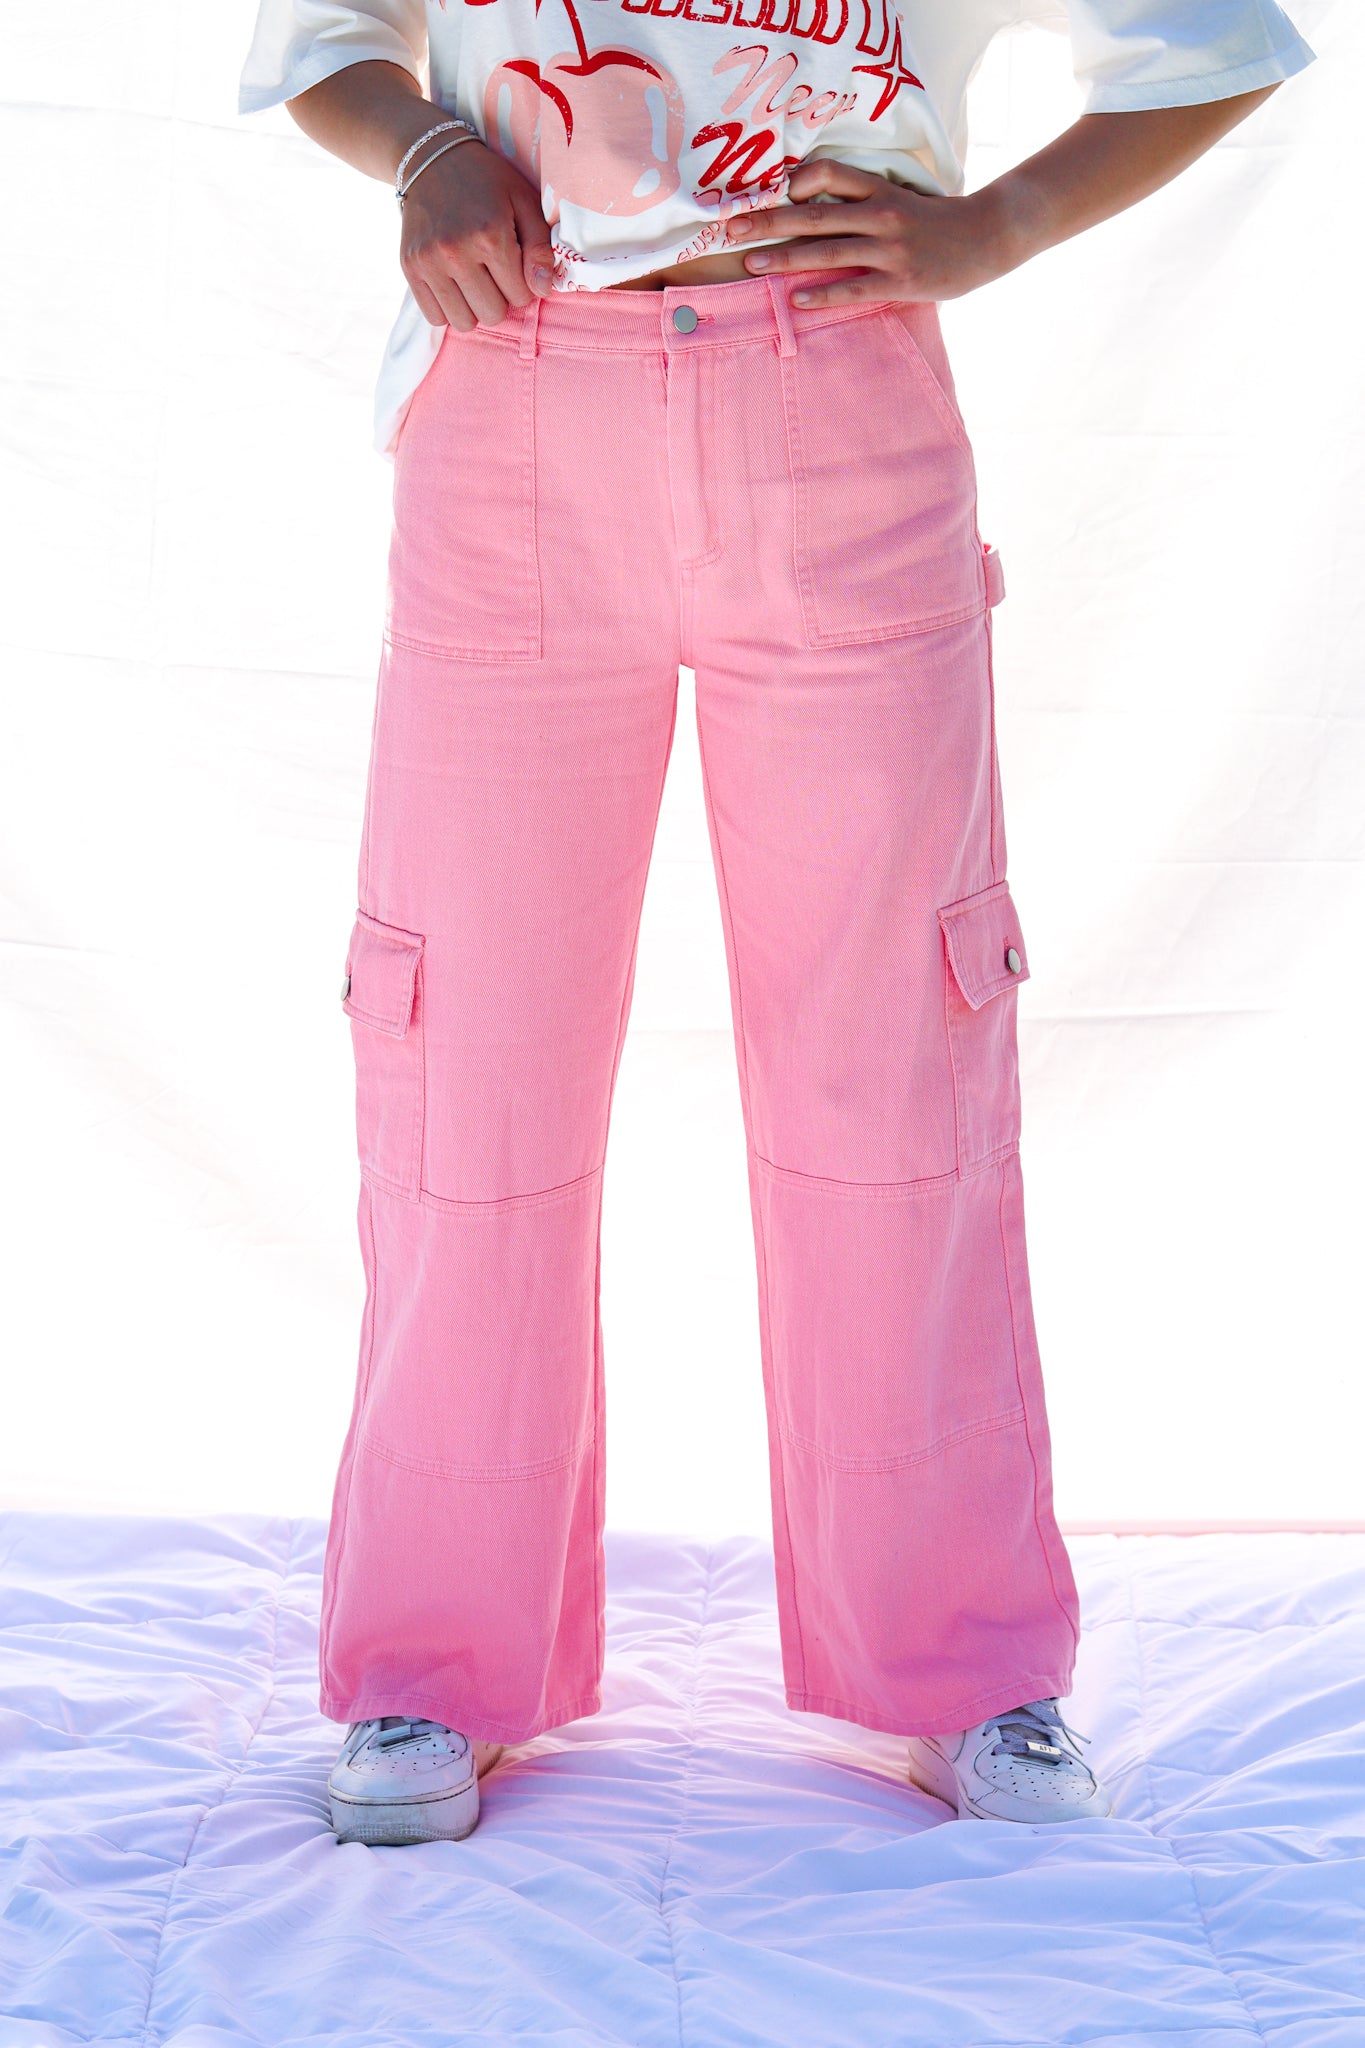 Precious Cargo Pants (Pink)